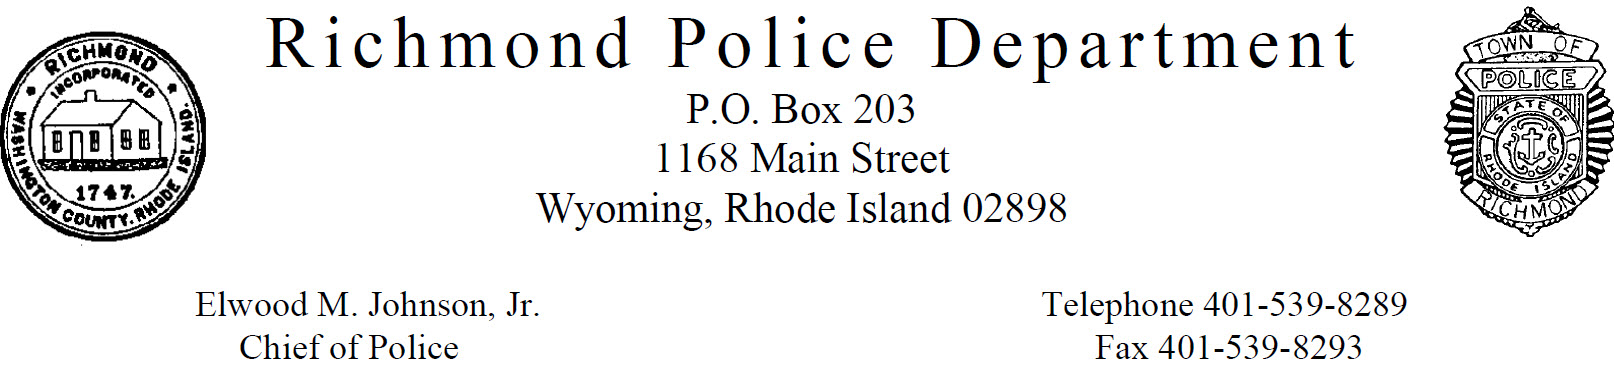 Richmond Police Department, RI Police Jobs